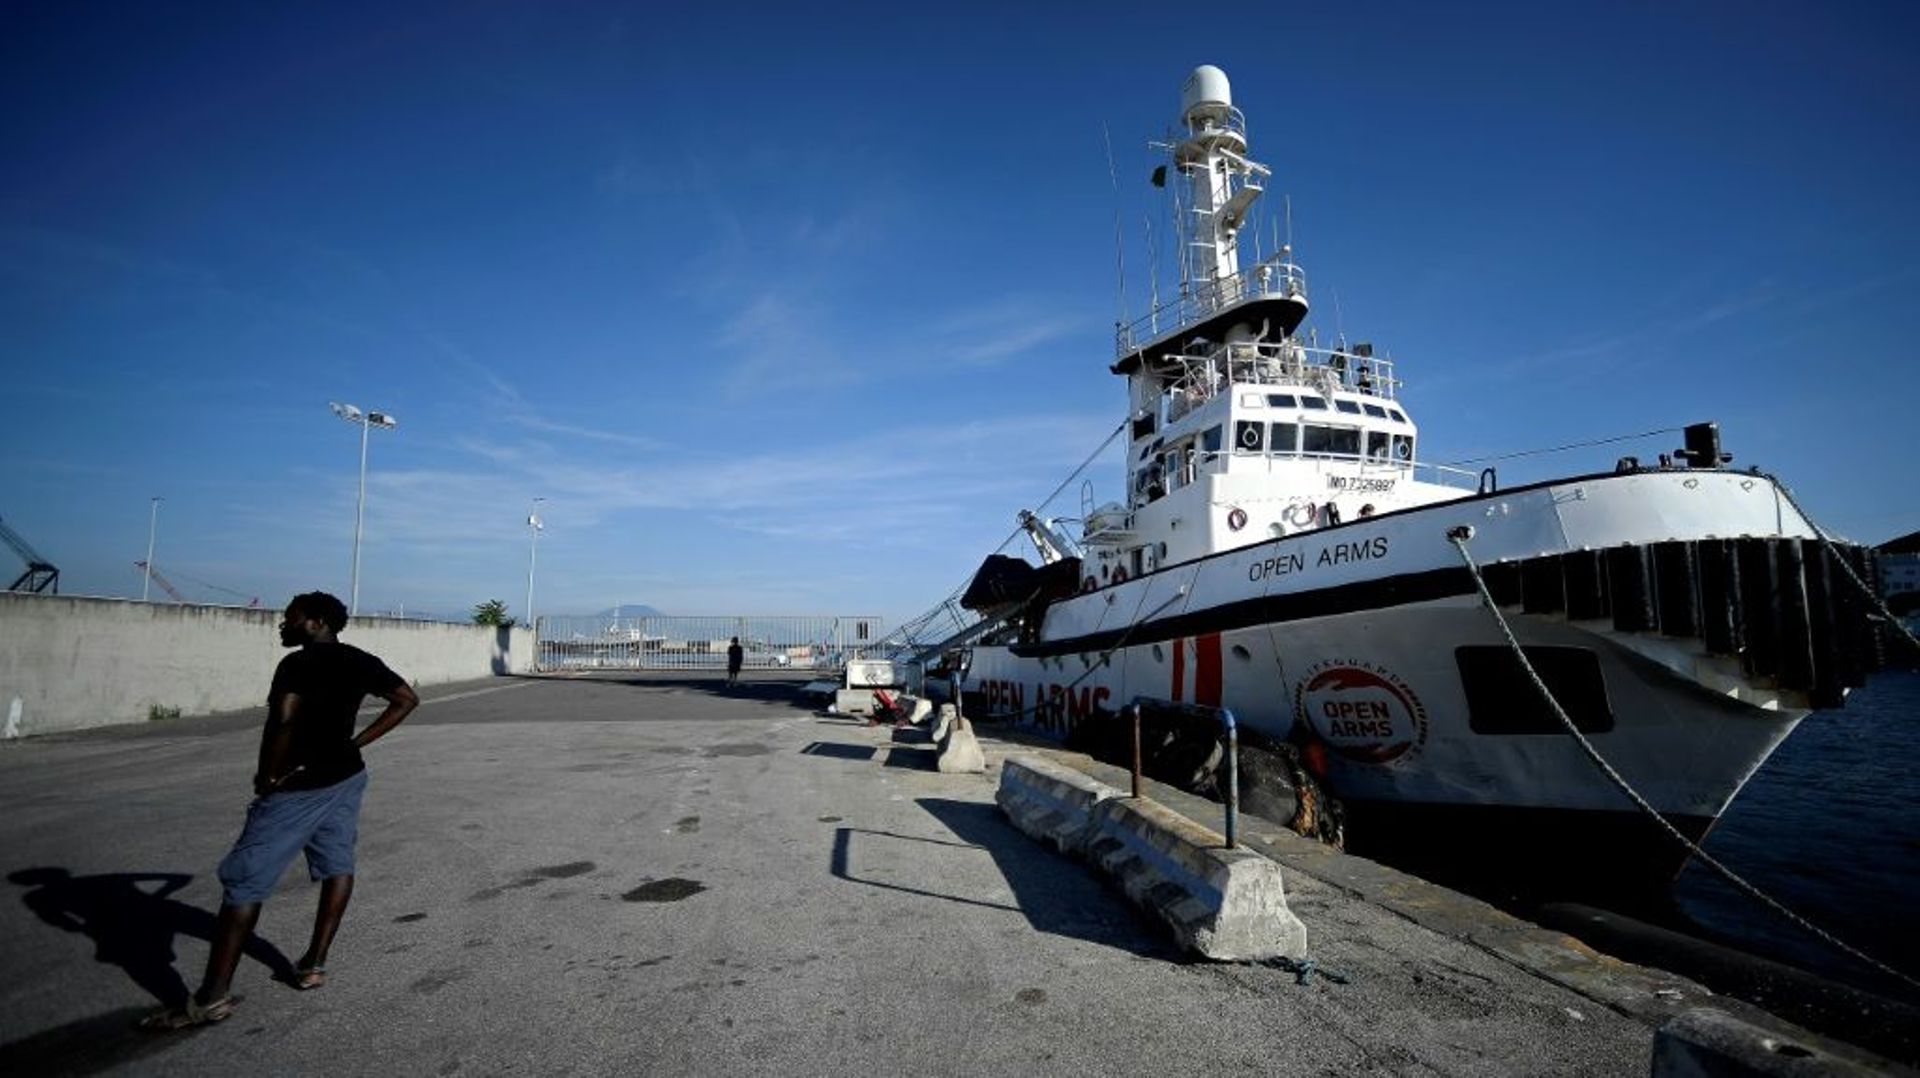 164-migrants-secourus-en-mediterranee-sont-toujours-en-attente-d-un-port